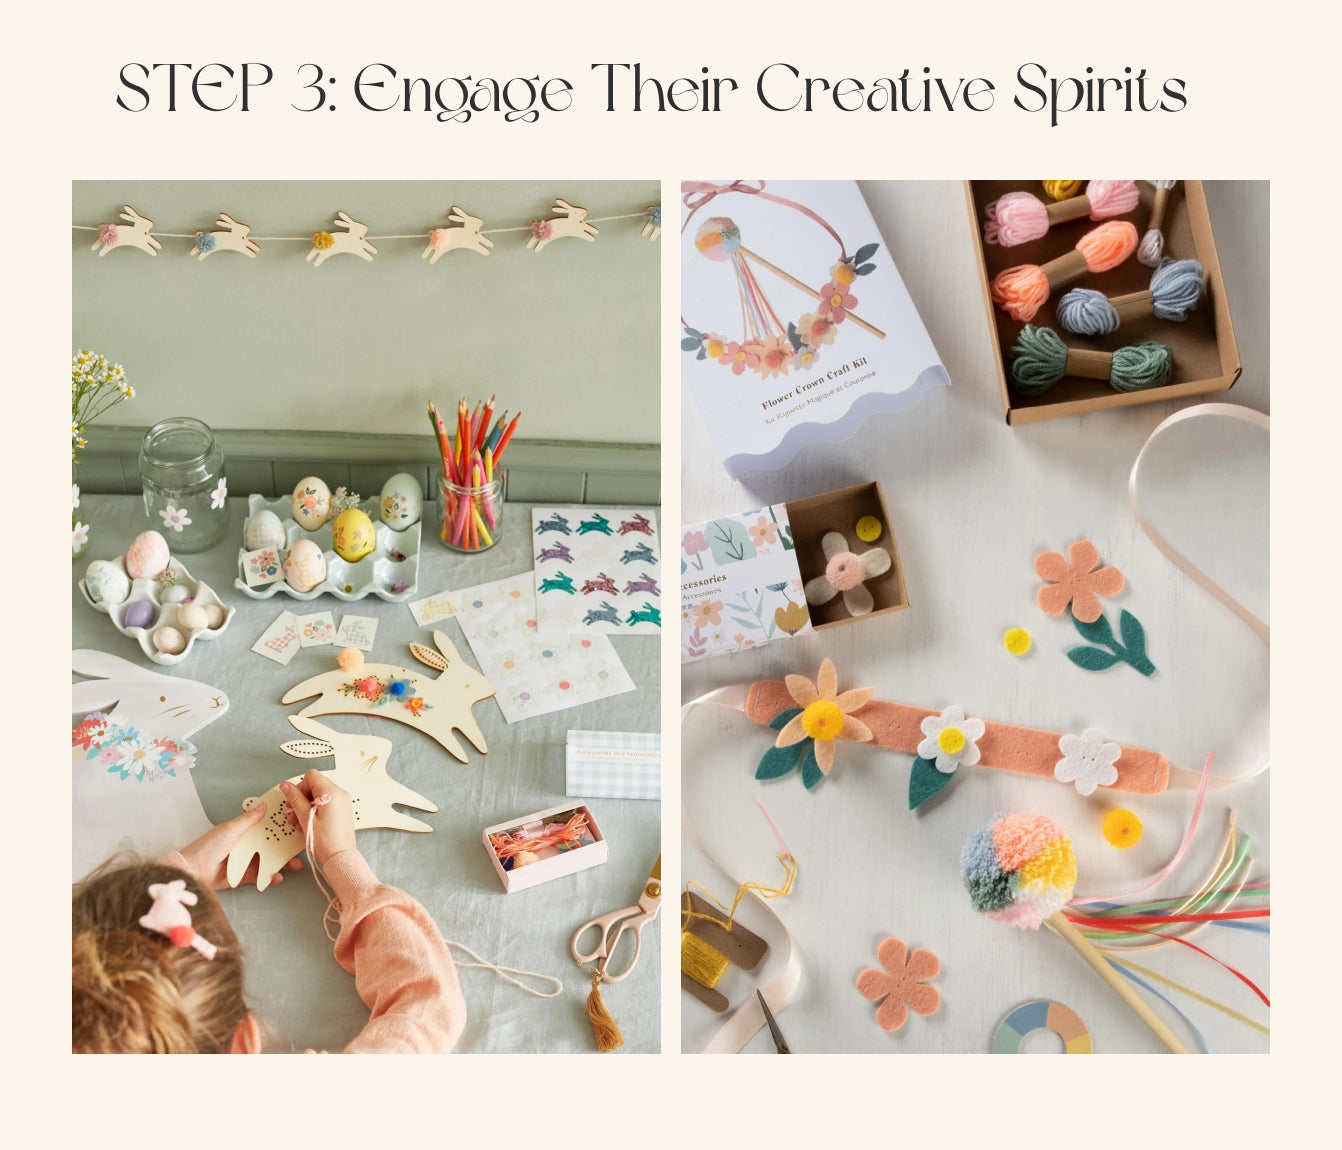 Step 3: Engage Their Creative Spirits